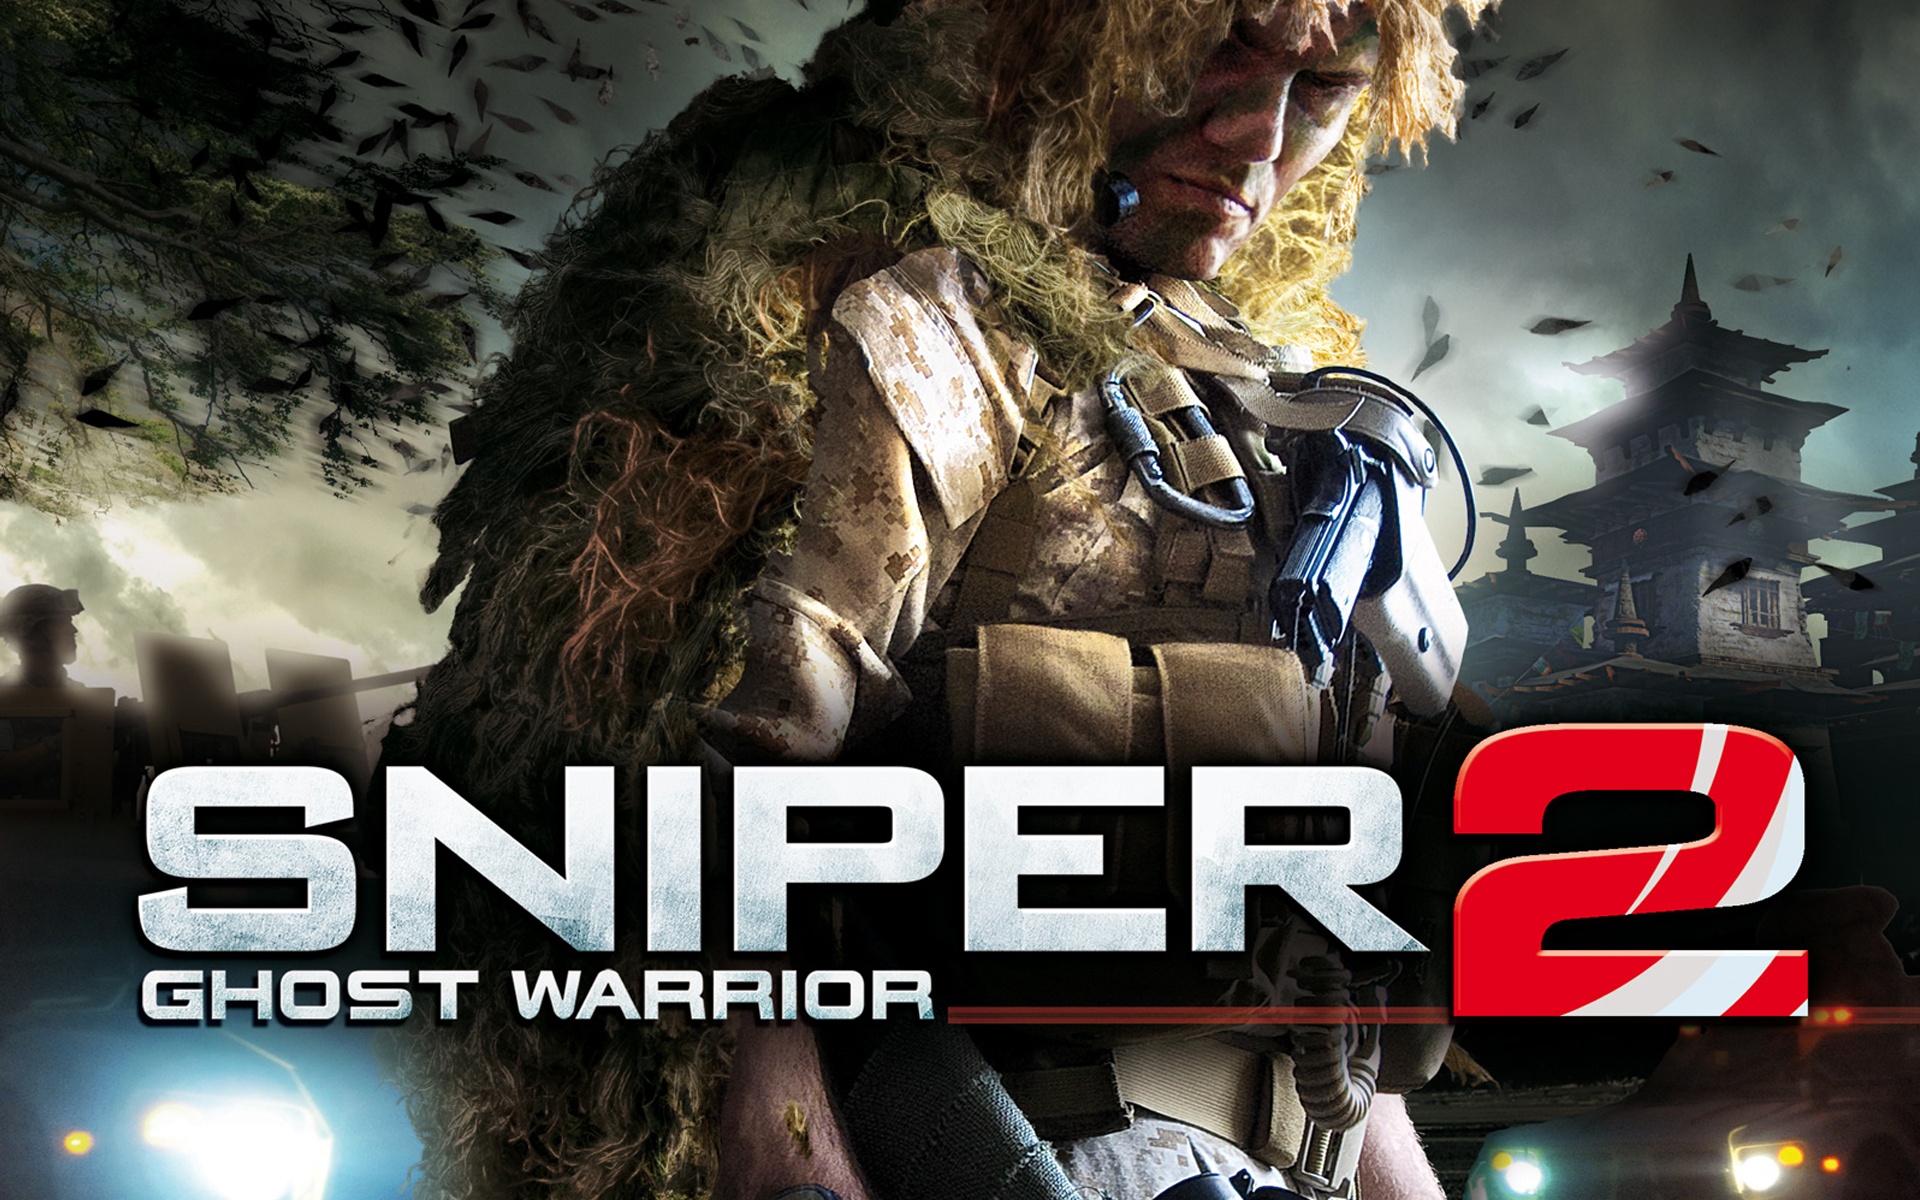 Sniper Ghost Warrior 2 – PS3